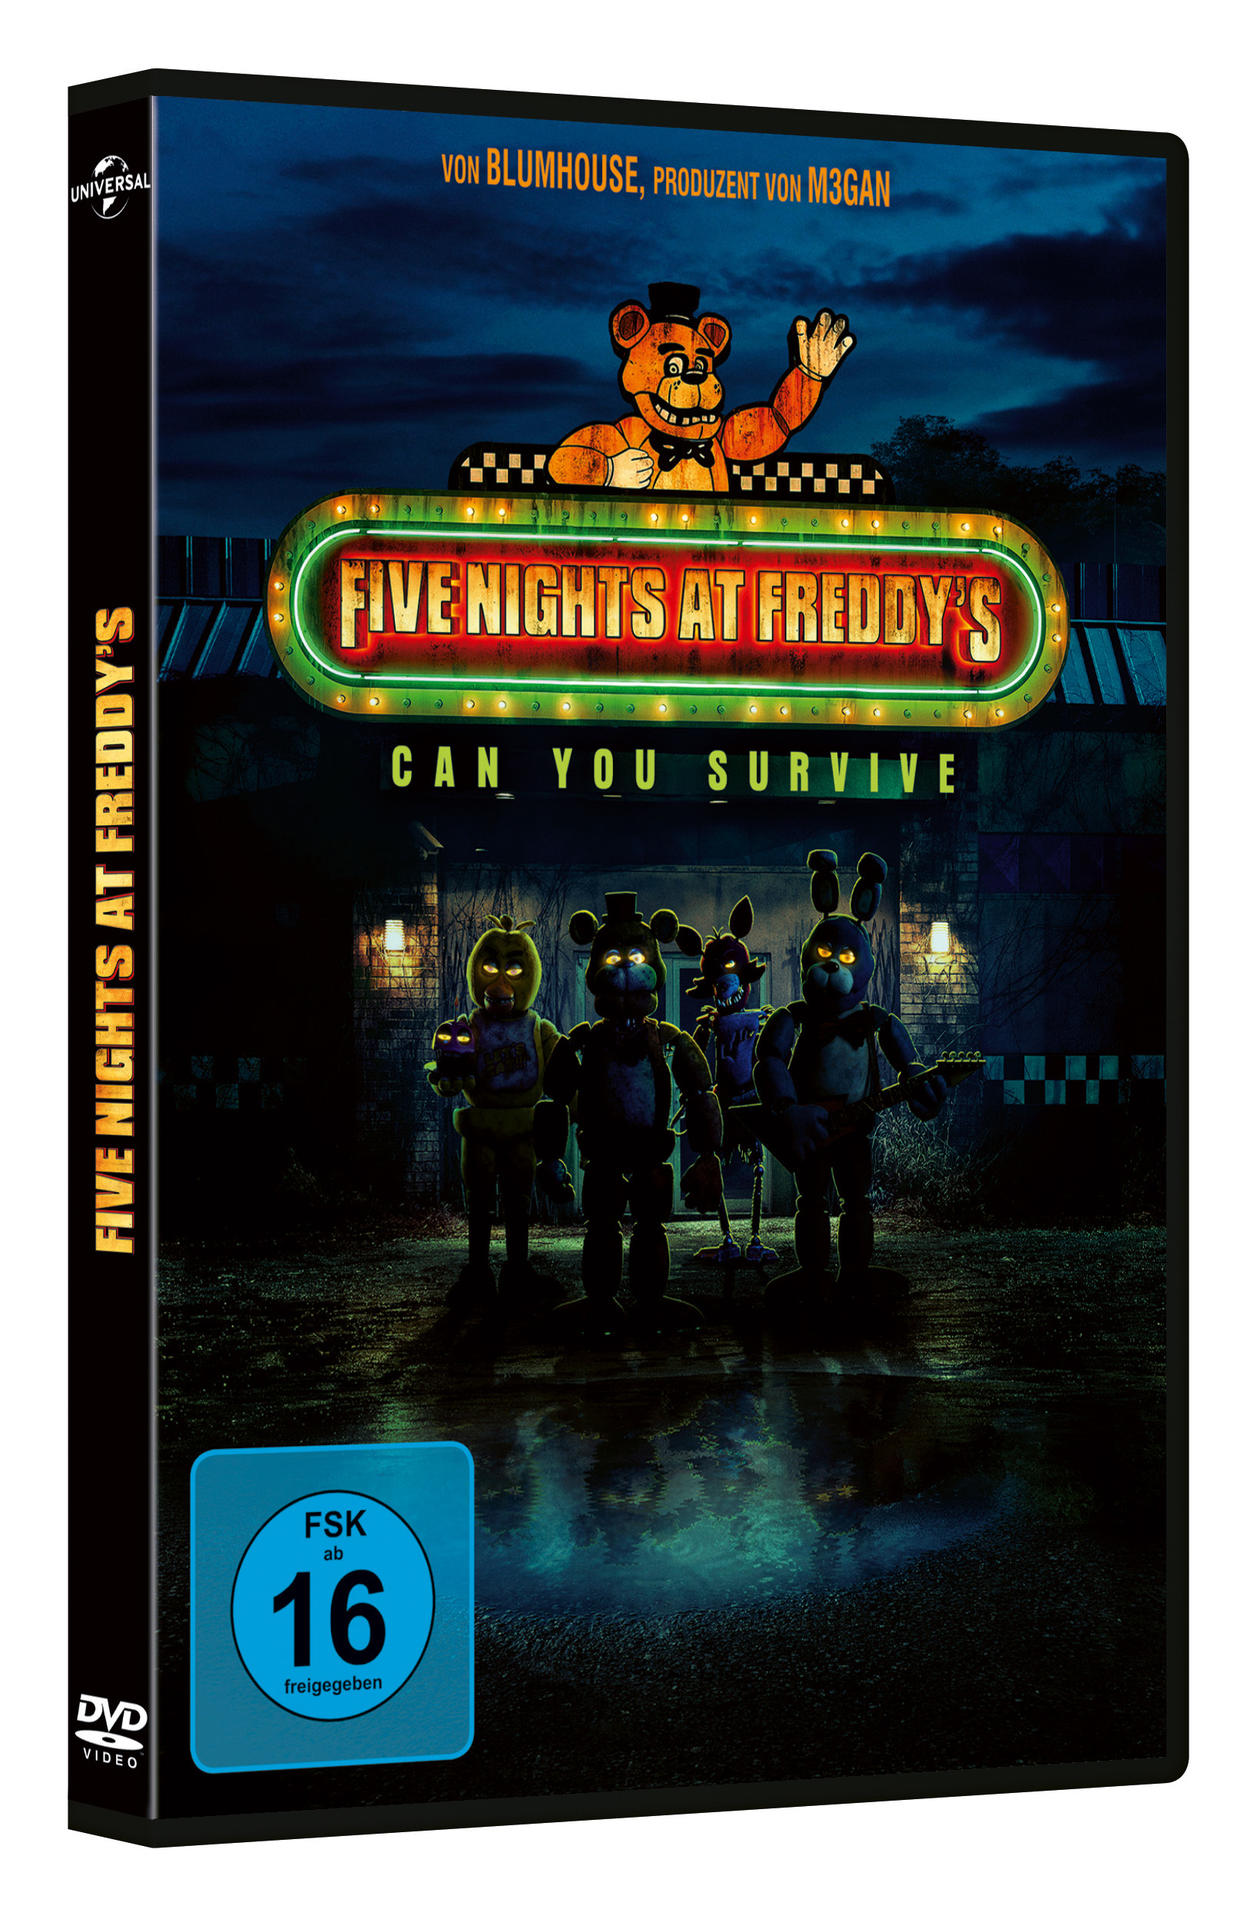 at Five DVD Freddy\'s Nights